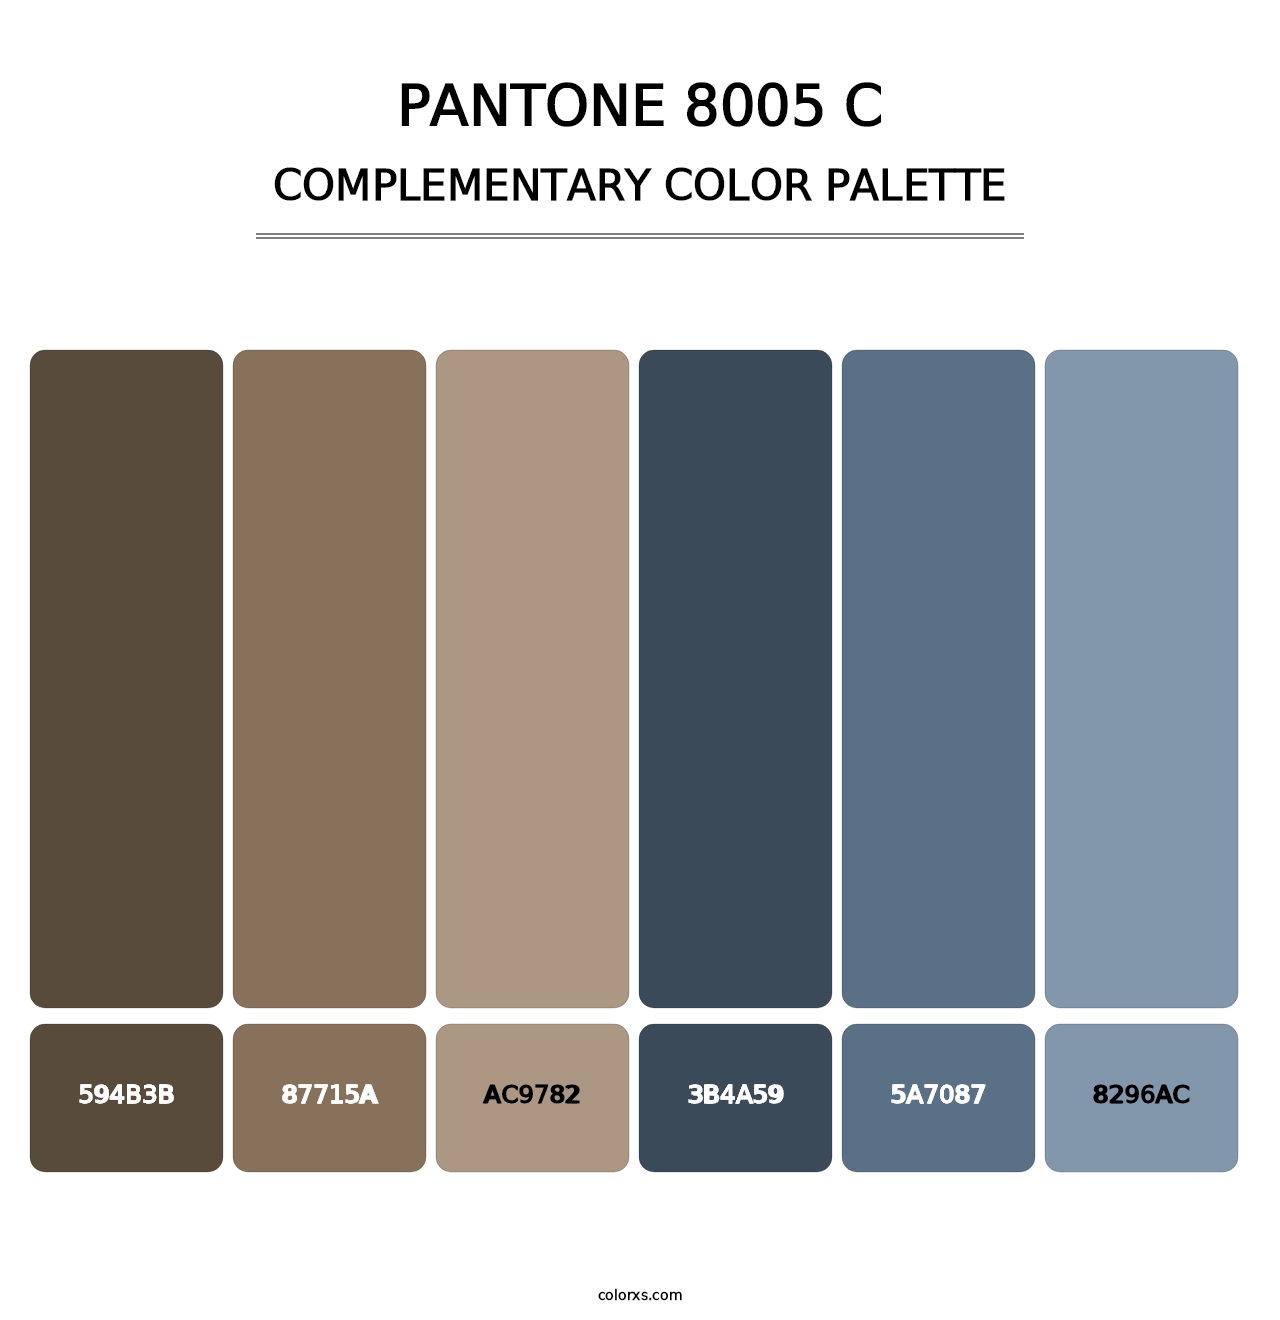 PANTONE 8005 C - Complementary Color Palette